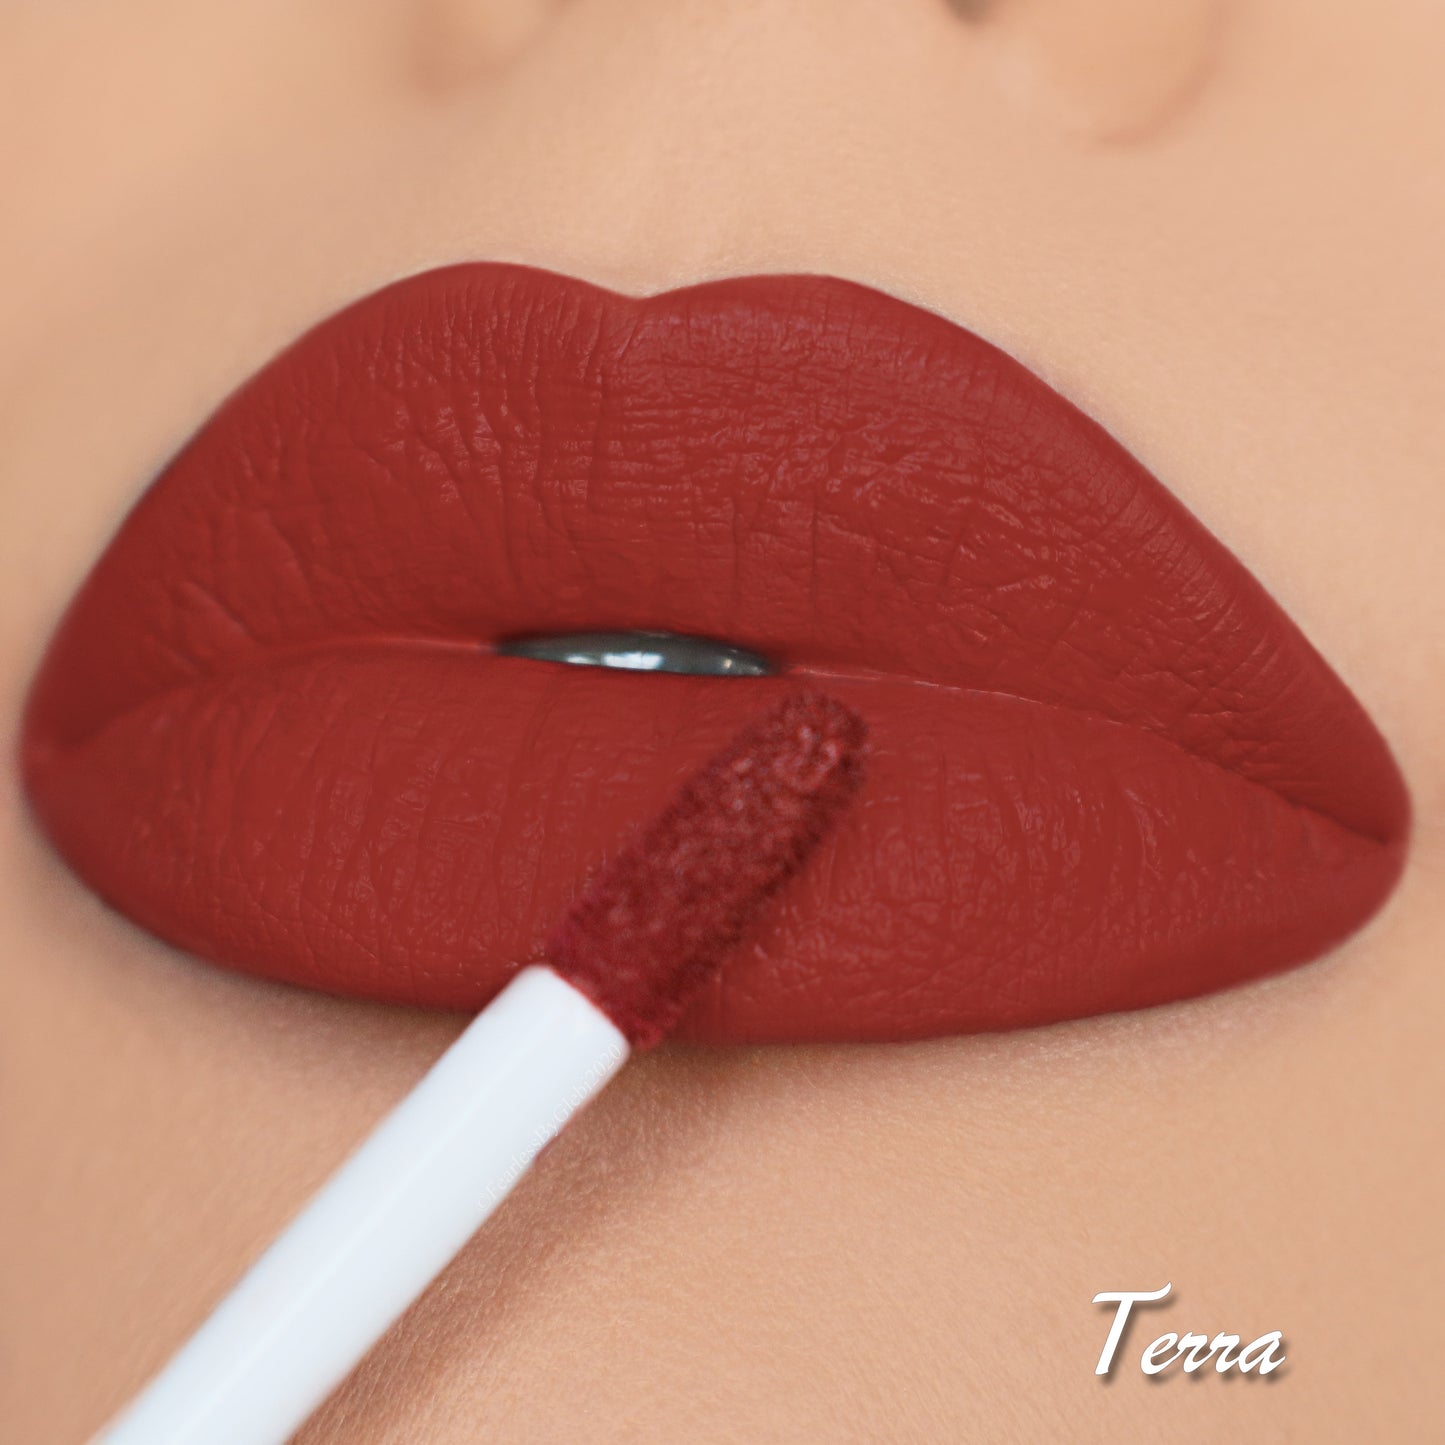 “Terra” Matte Liquid Lipstick